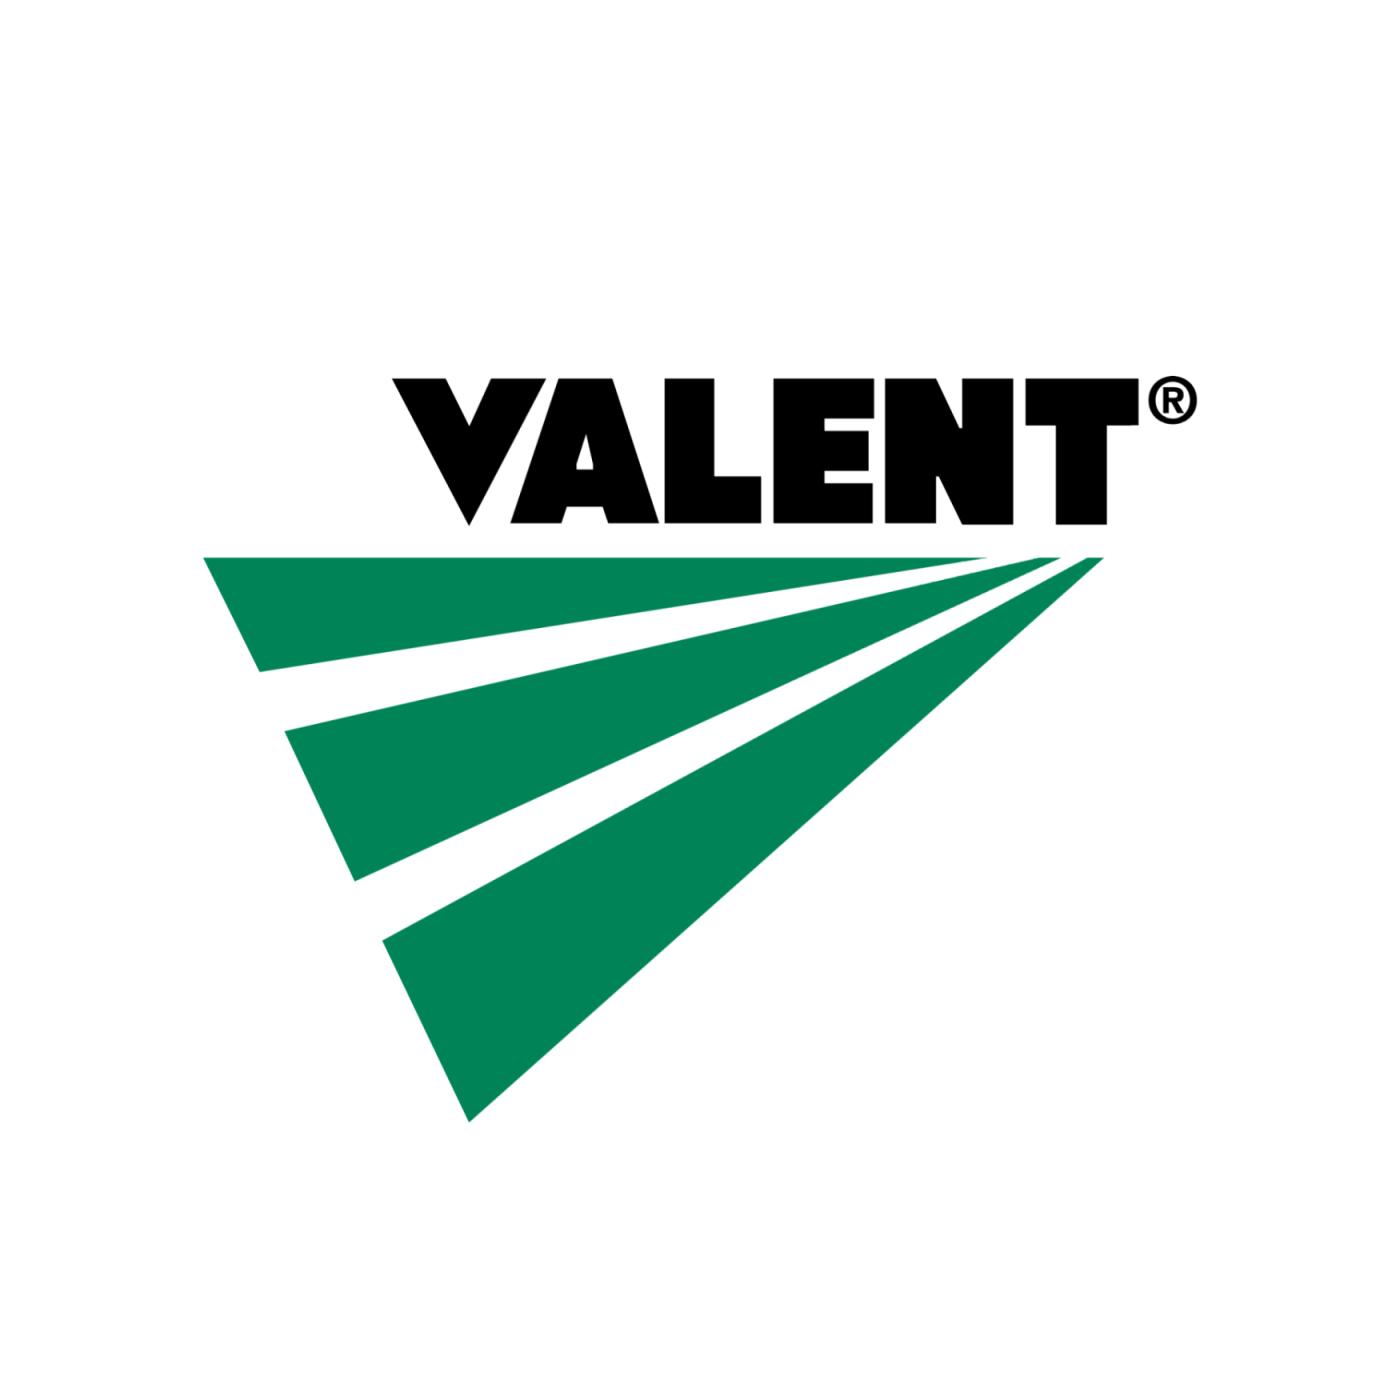 Valent-square-logo